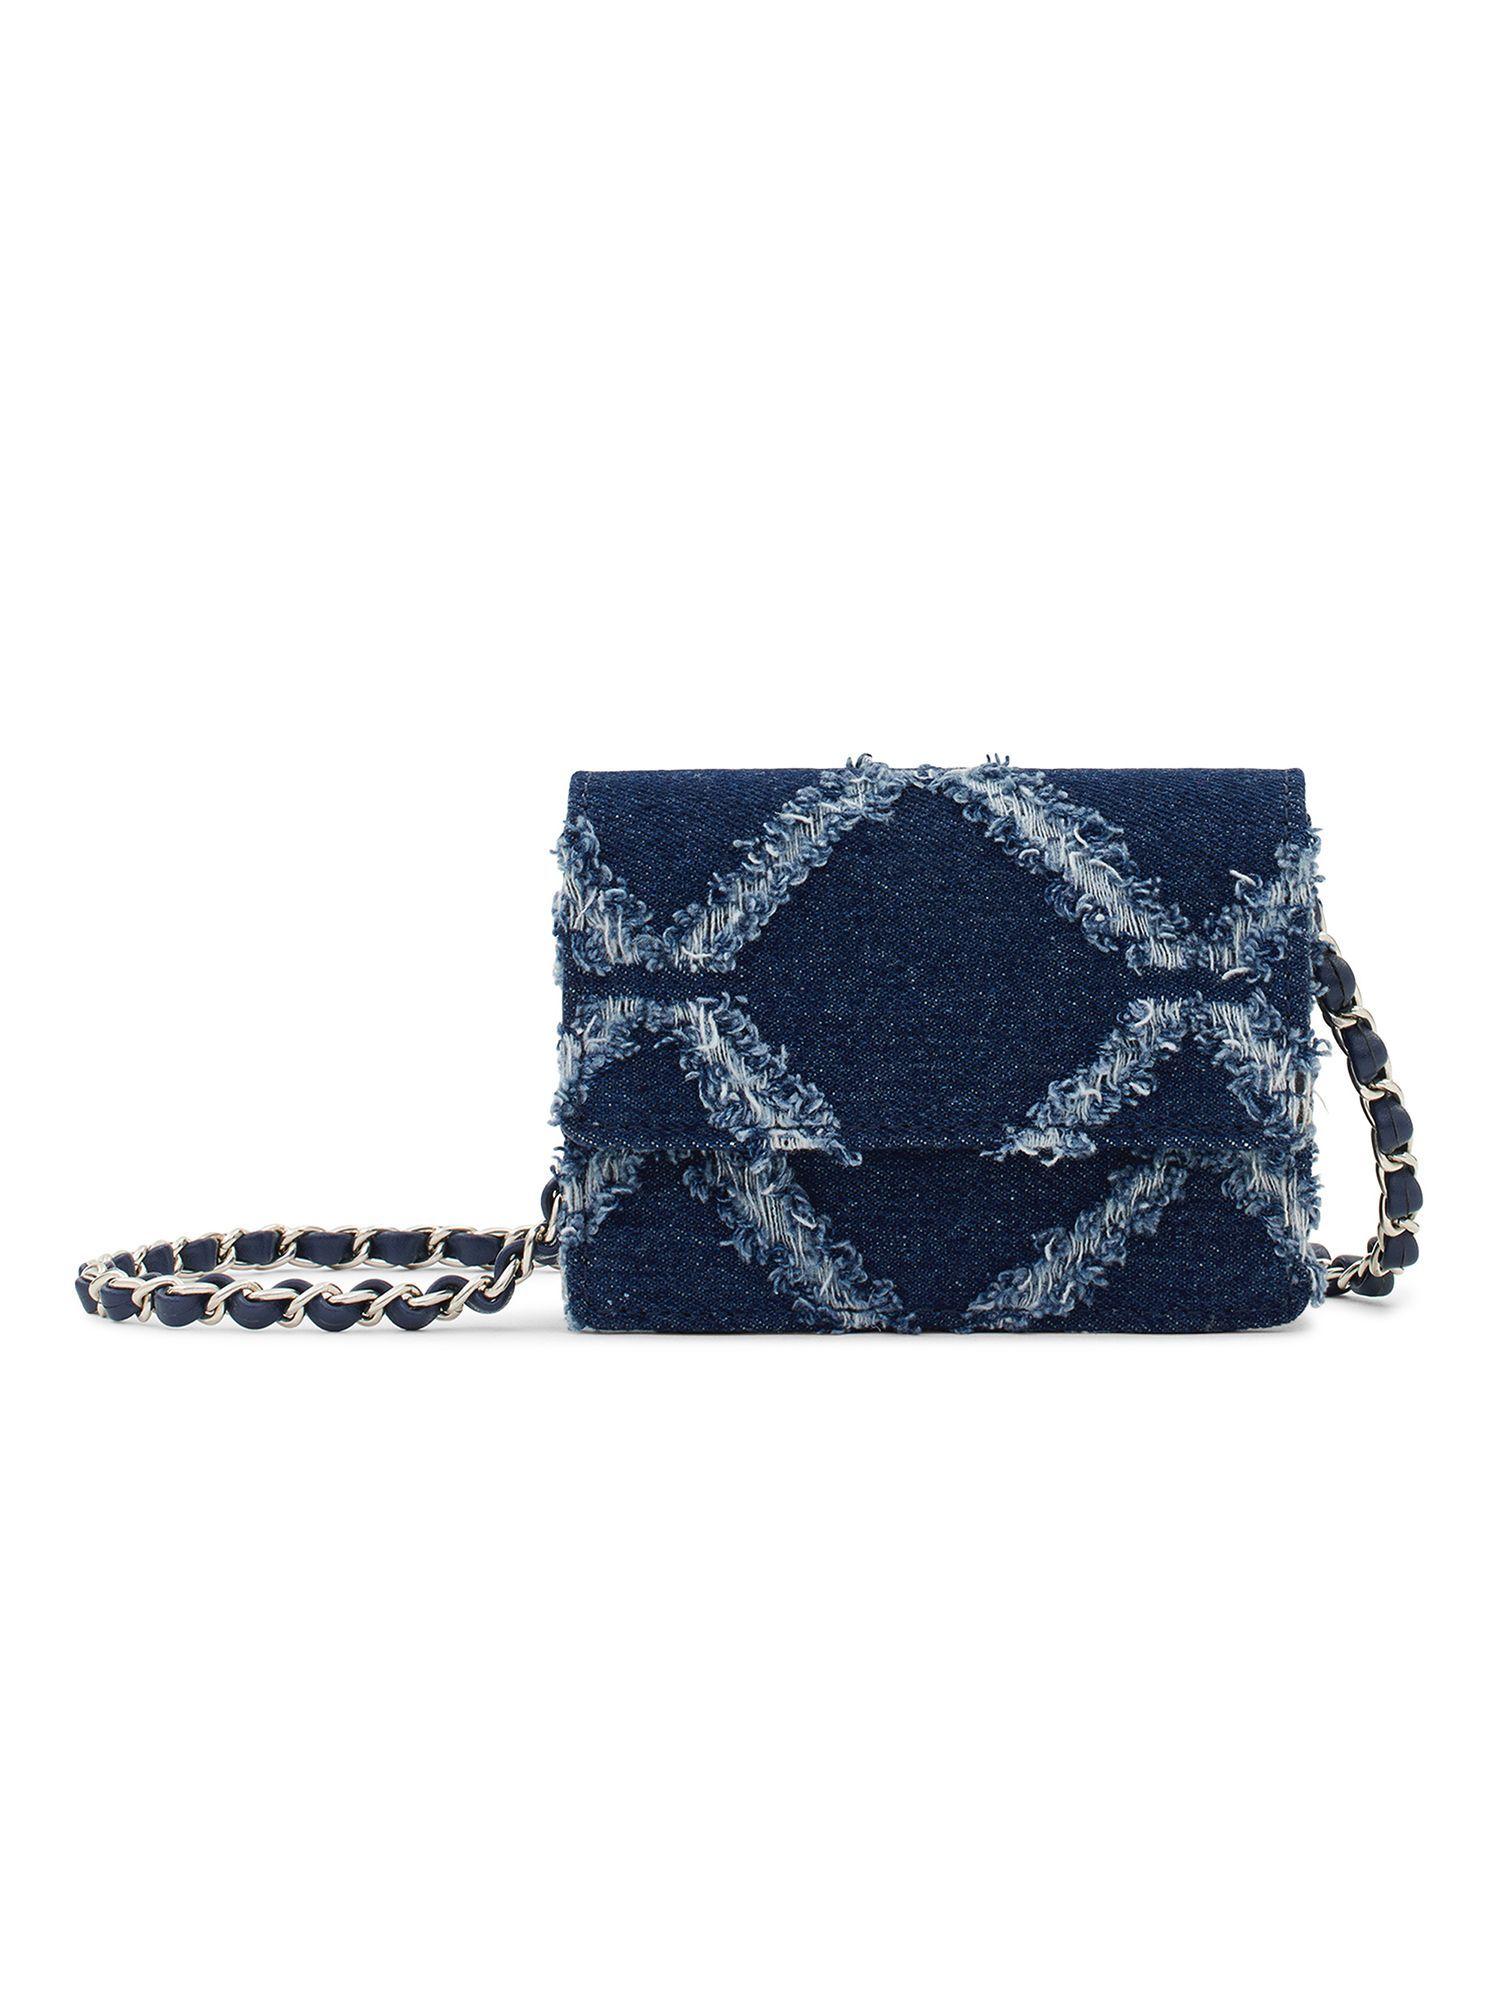 camilla denim checks mini crossbody bag for women -navy blue (s)